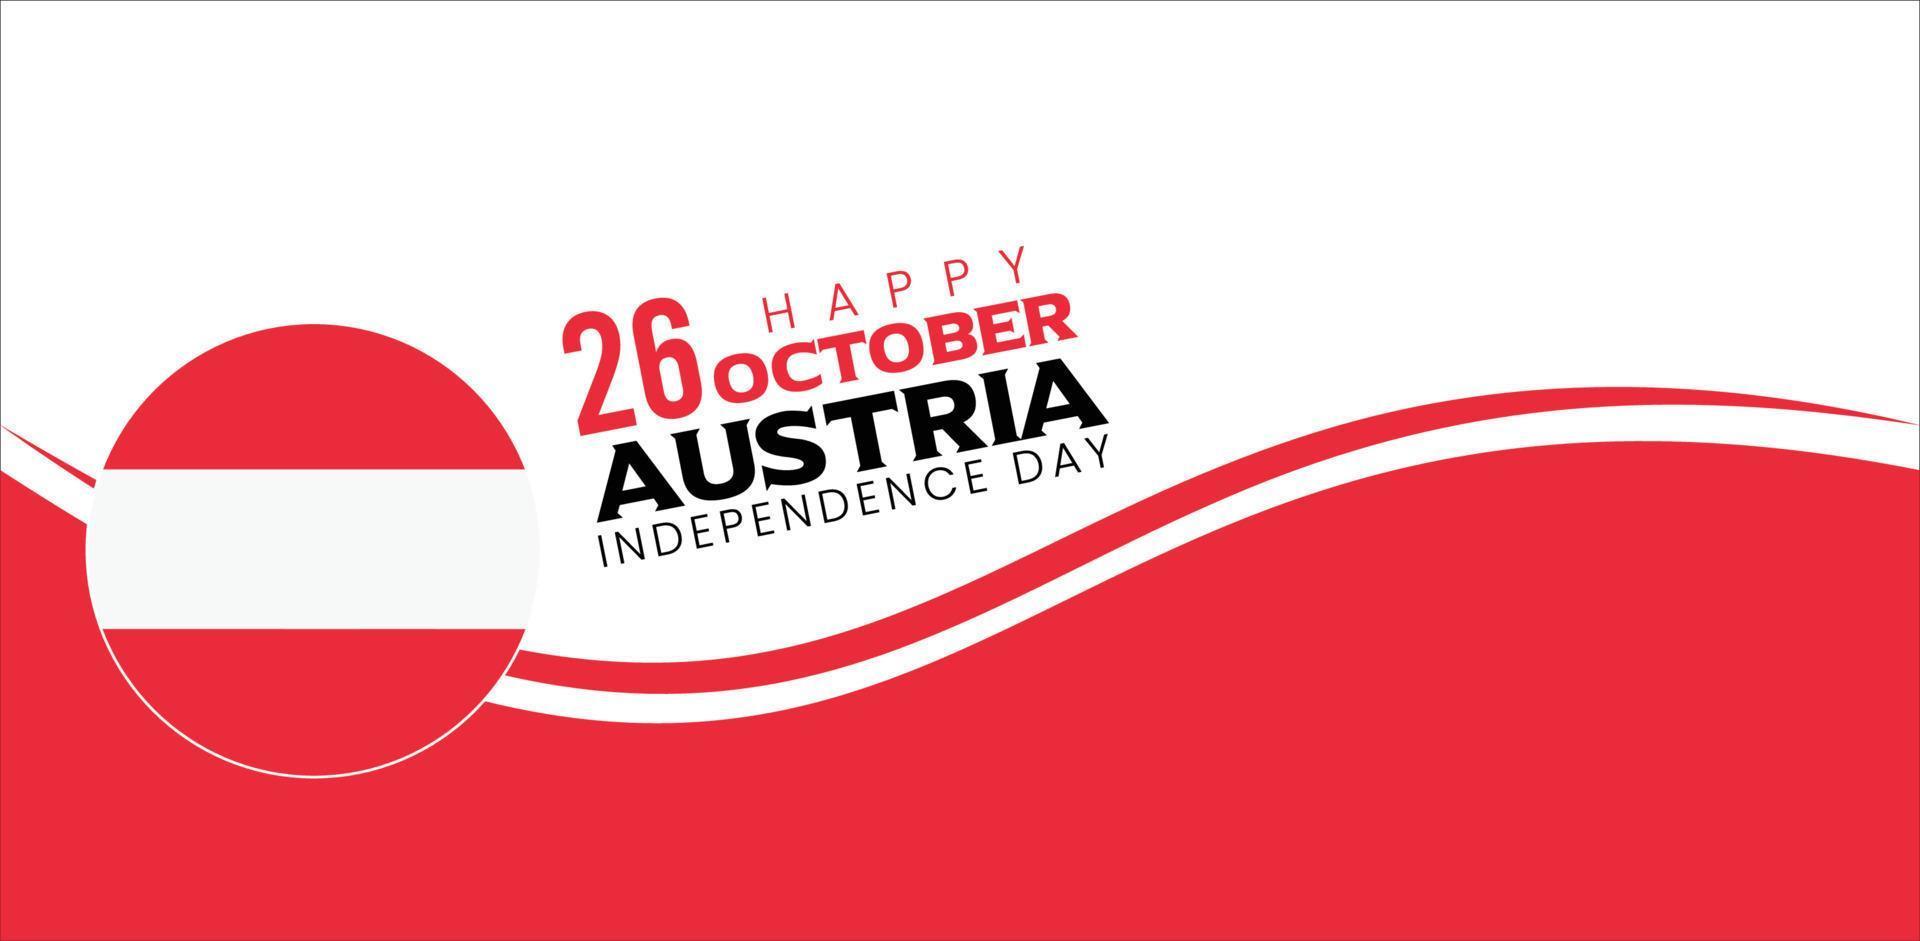 26: e oktober österrike oberoende dag fira vektor